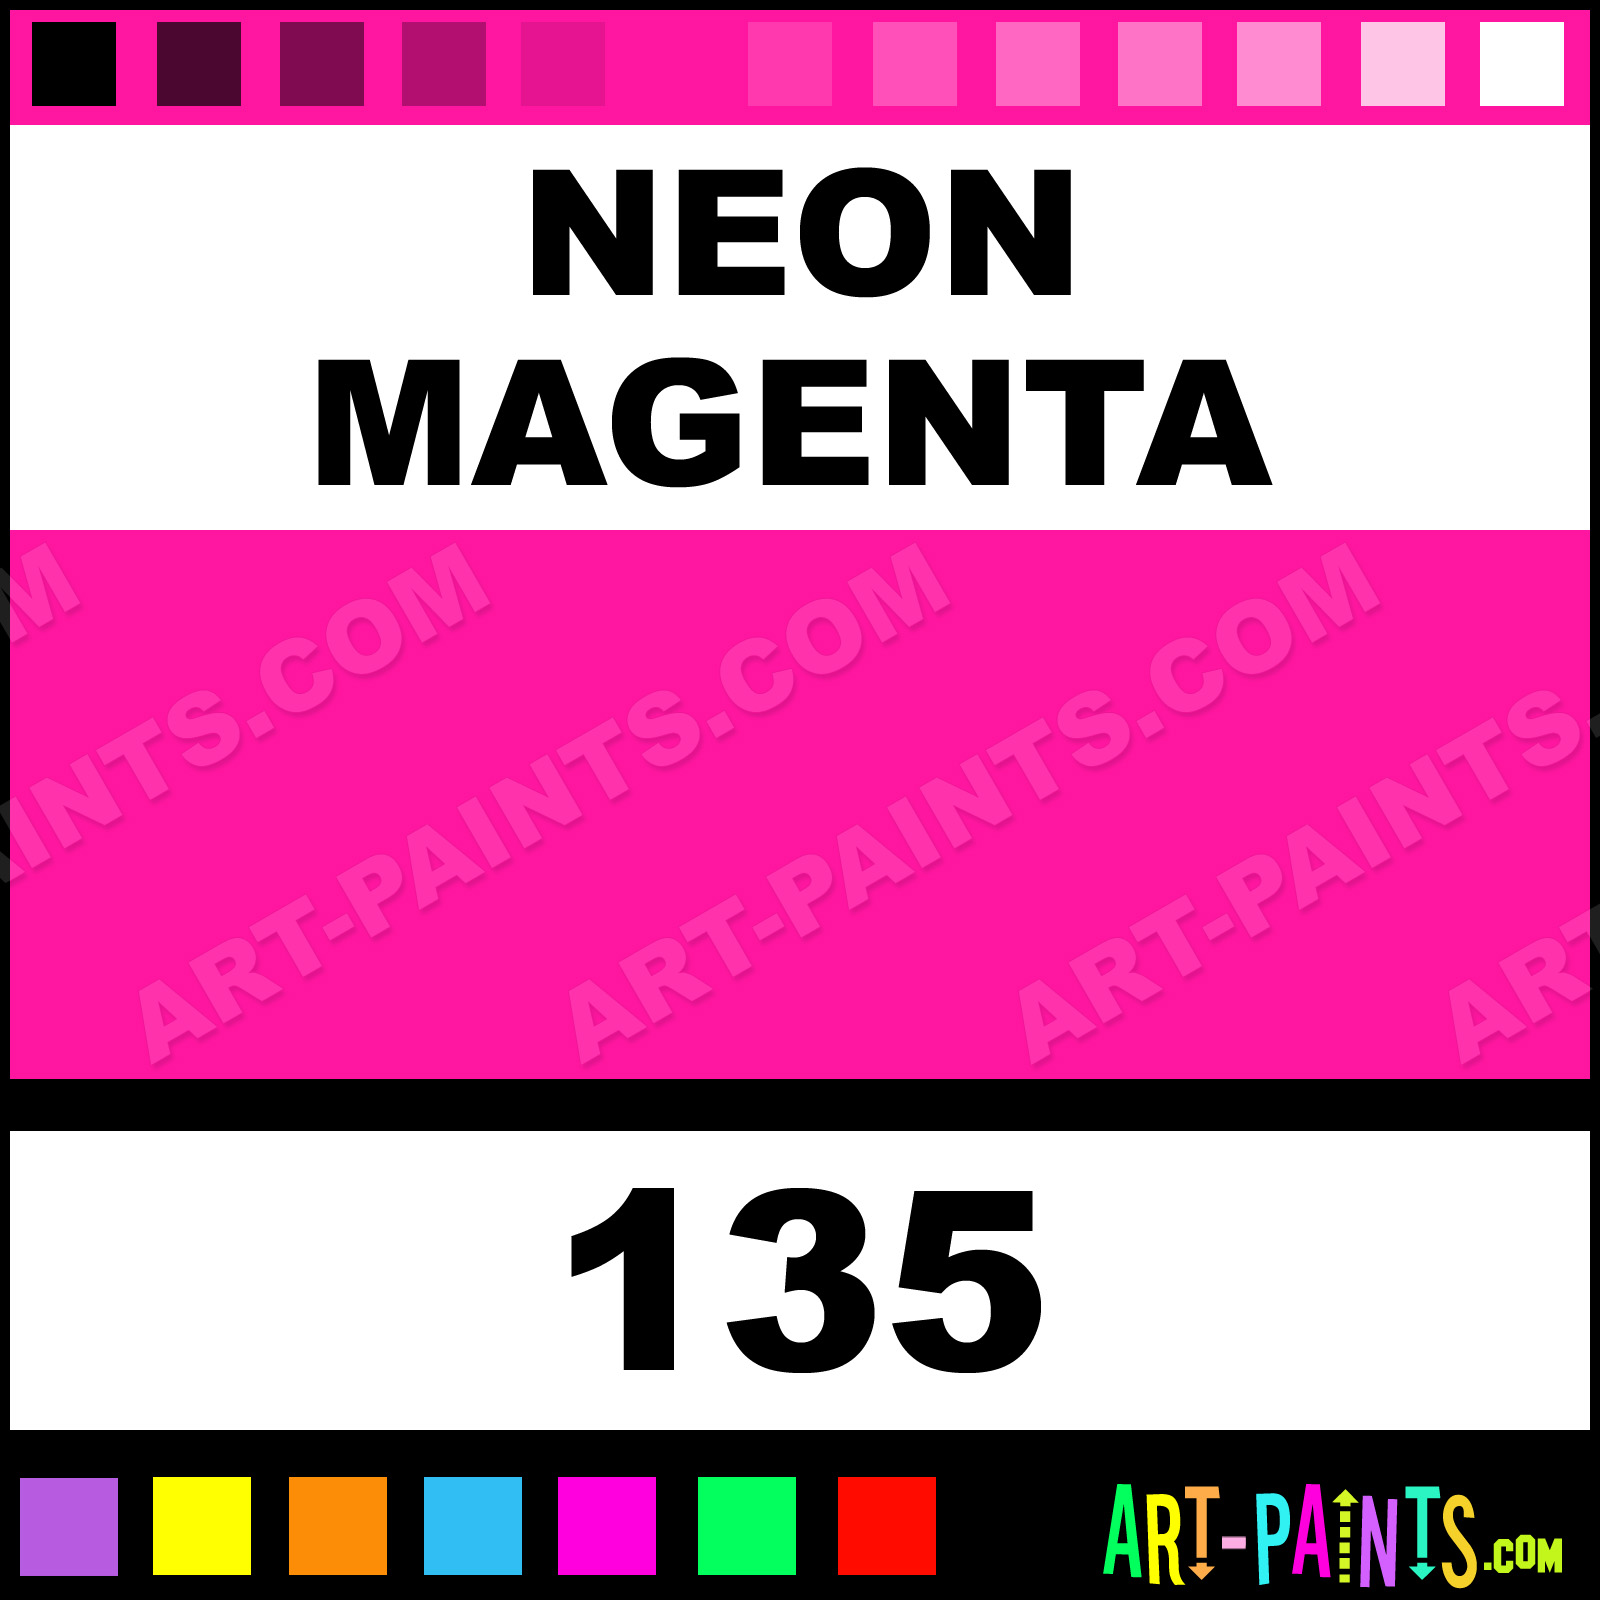 http://www.art-paints.com/Paints/Airbrush/Life-Tone/Neon-Magenta/Neon-Magenta-xlg.jpg